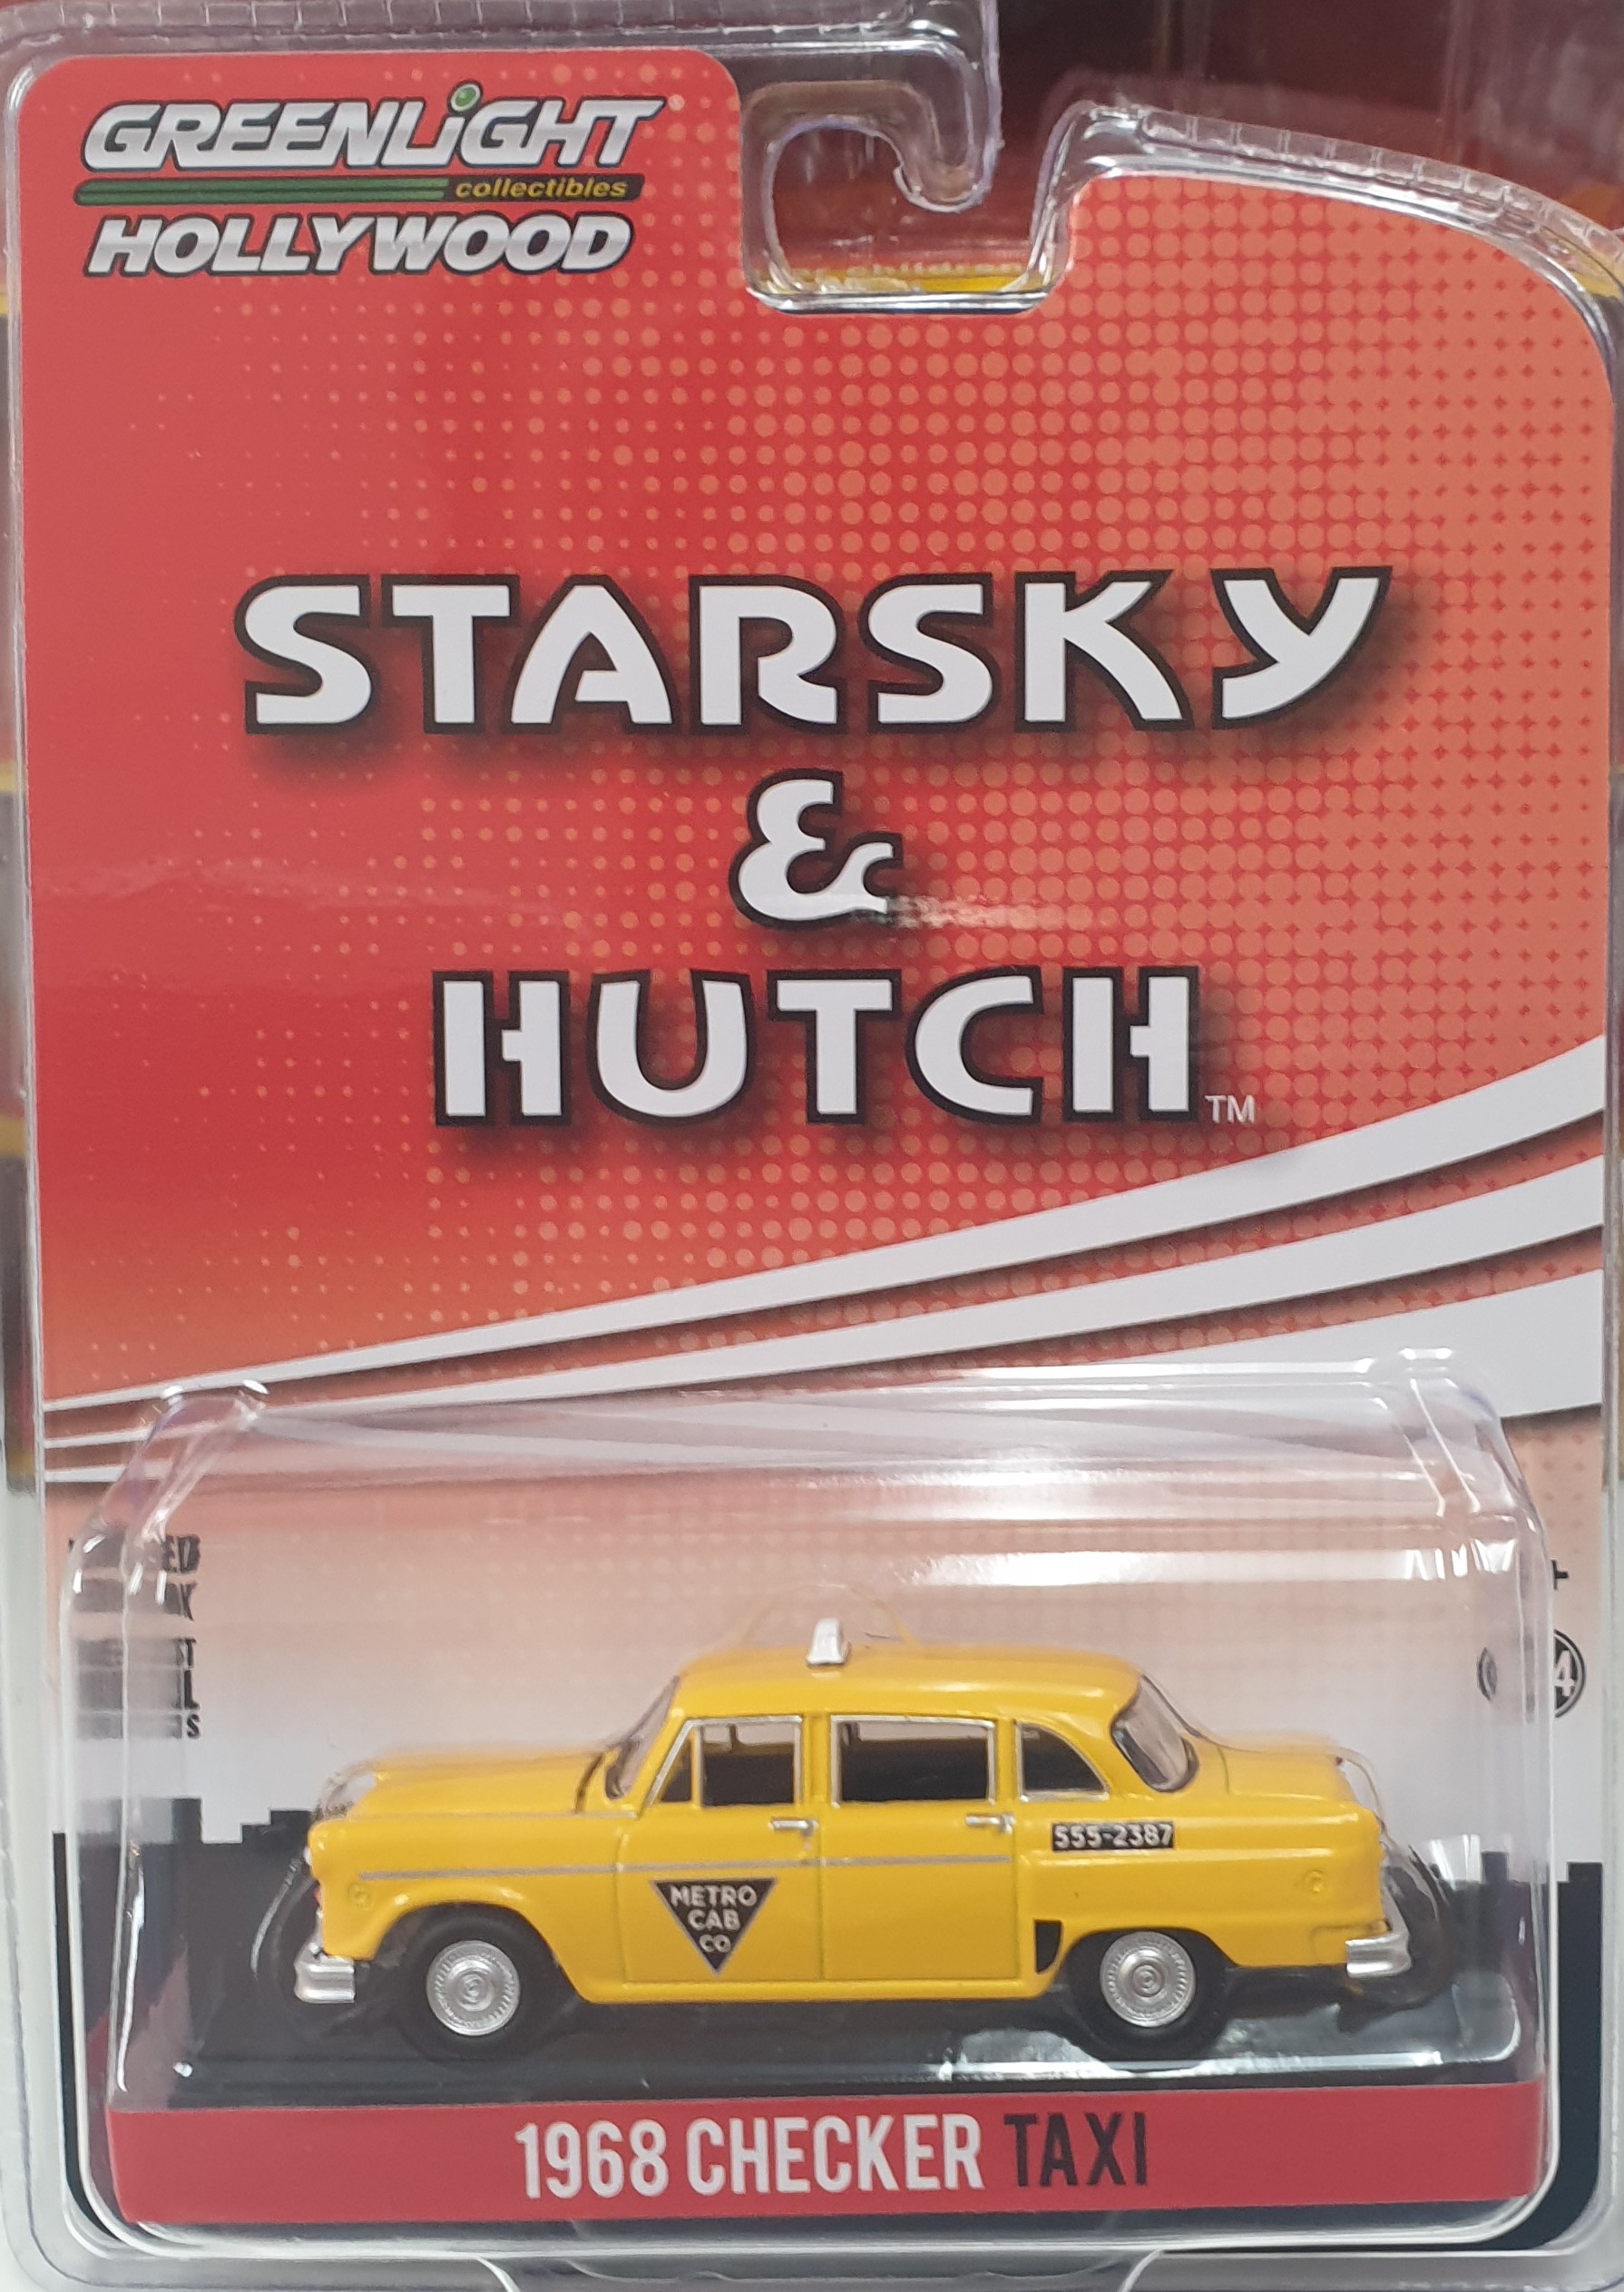 1968 Checker Taxi Starsky & Hutch TV Show 1/64 Greenlight Hollywood